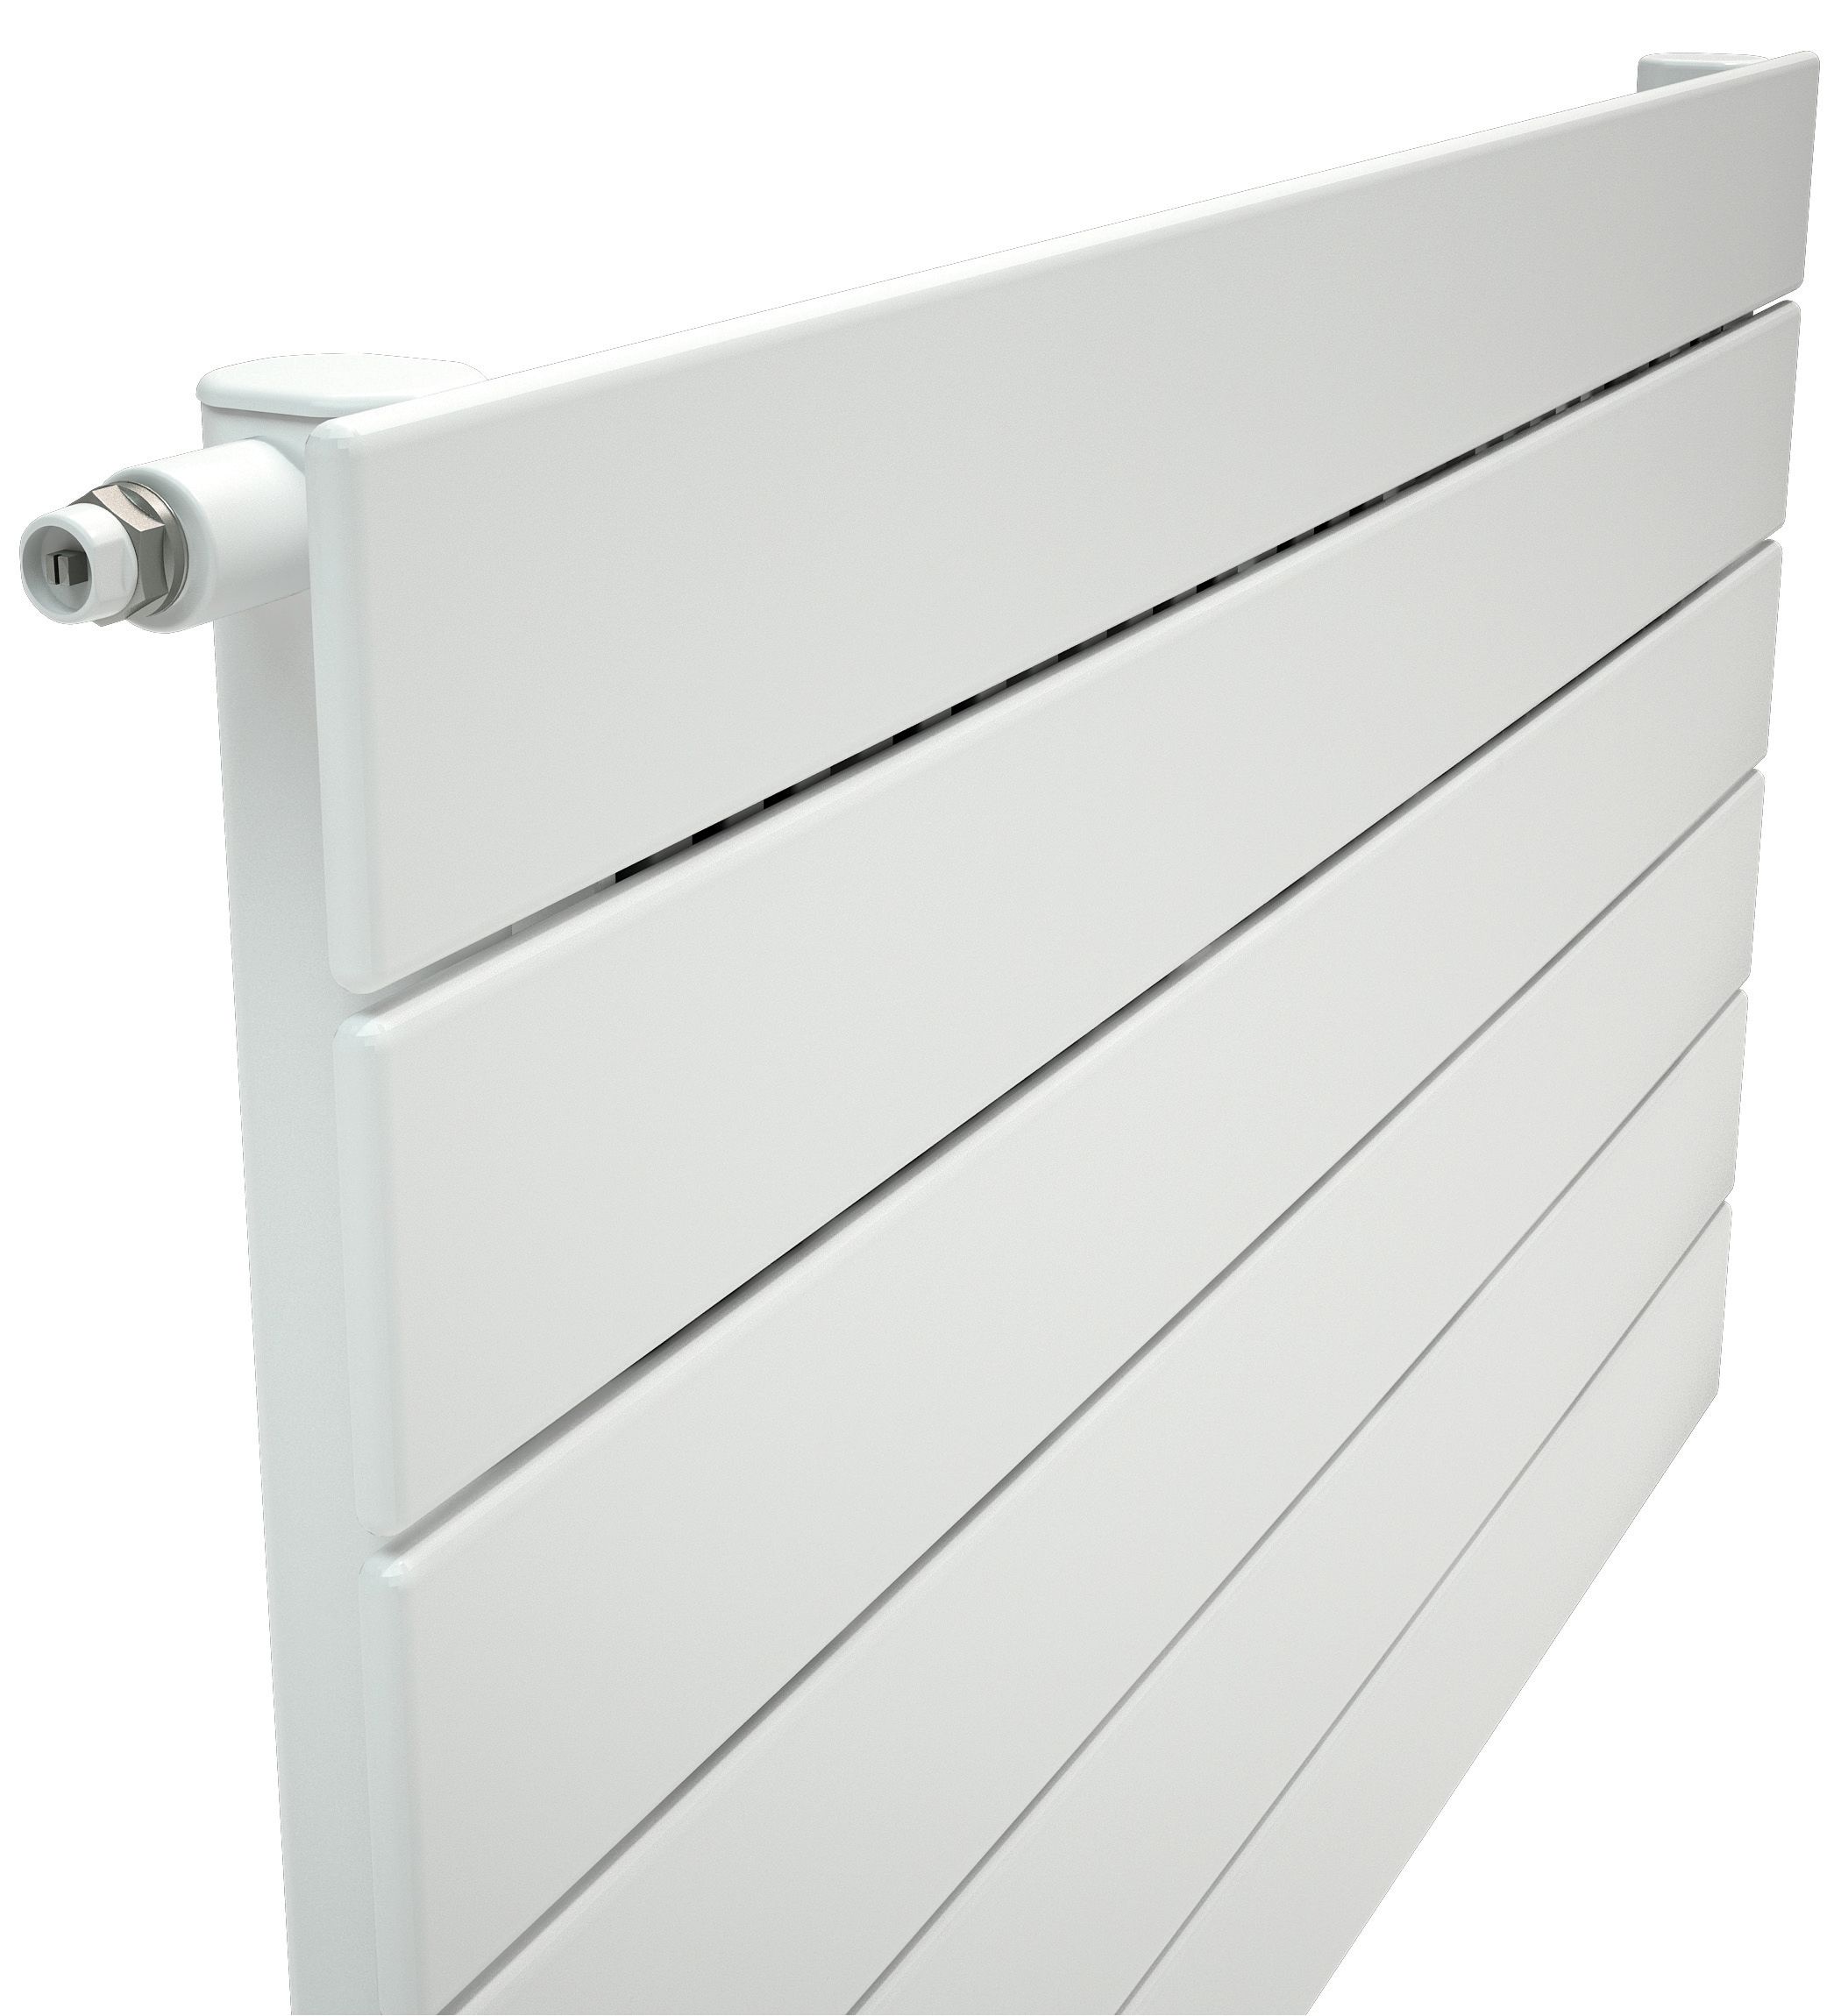 Image of Henrad Verona Single Panel Designer Radiator - White 592 x 500 mm